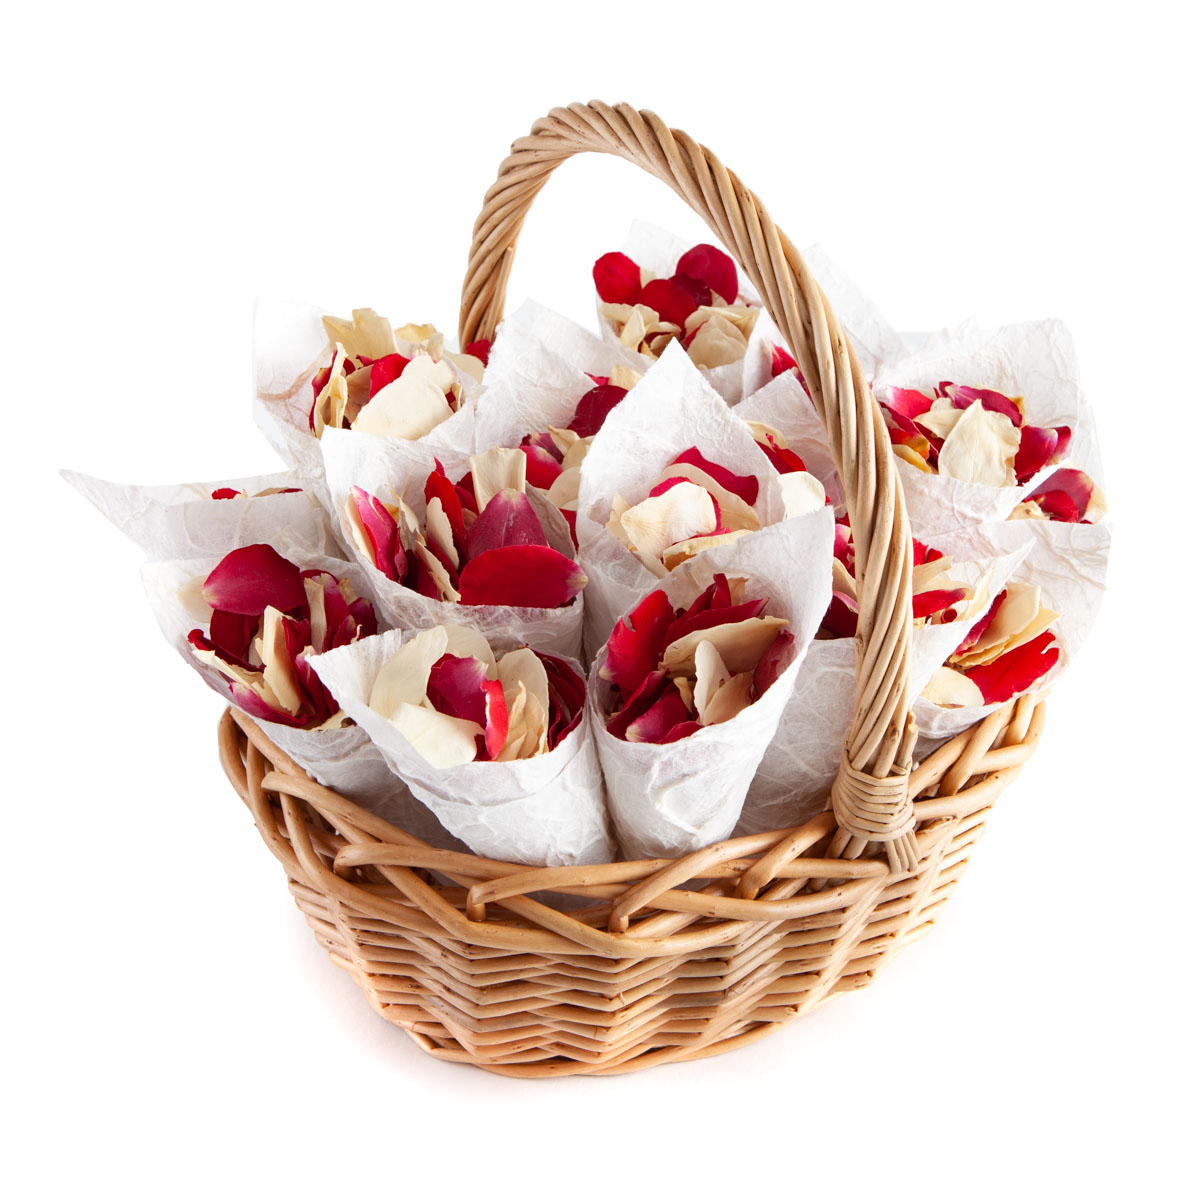 Red & Cream Rose Petals - Biodegradable Confetti - Real Flower Petal Confetti - Confetti Cone Basket